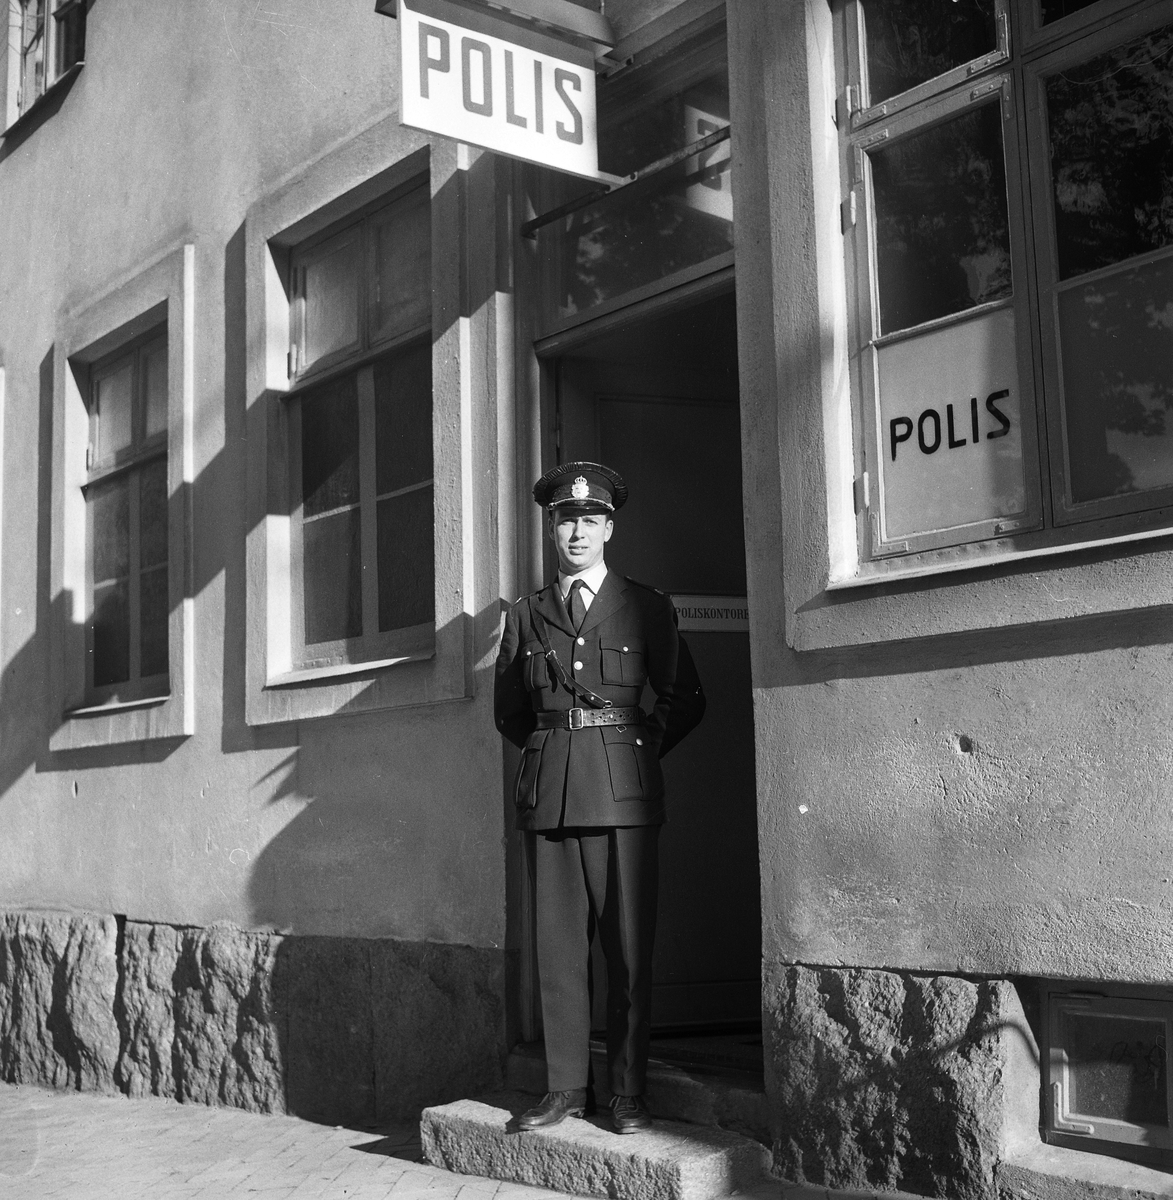 Polischefer andas ut.
16 juli 1959.